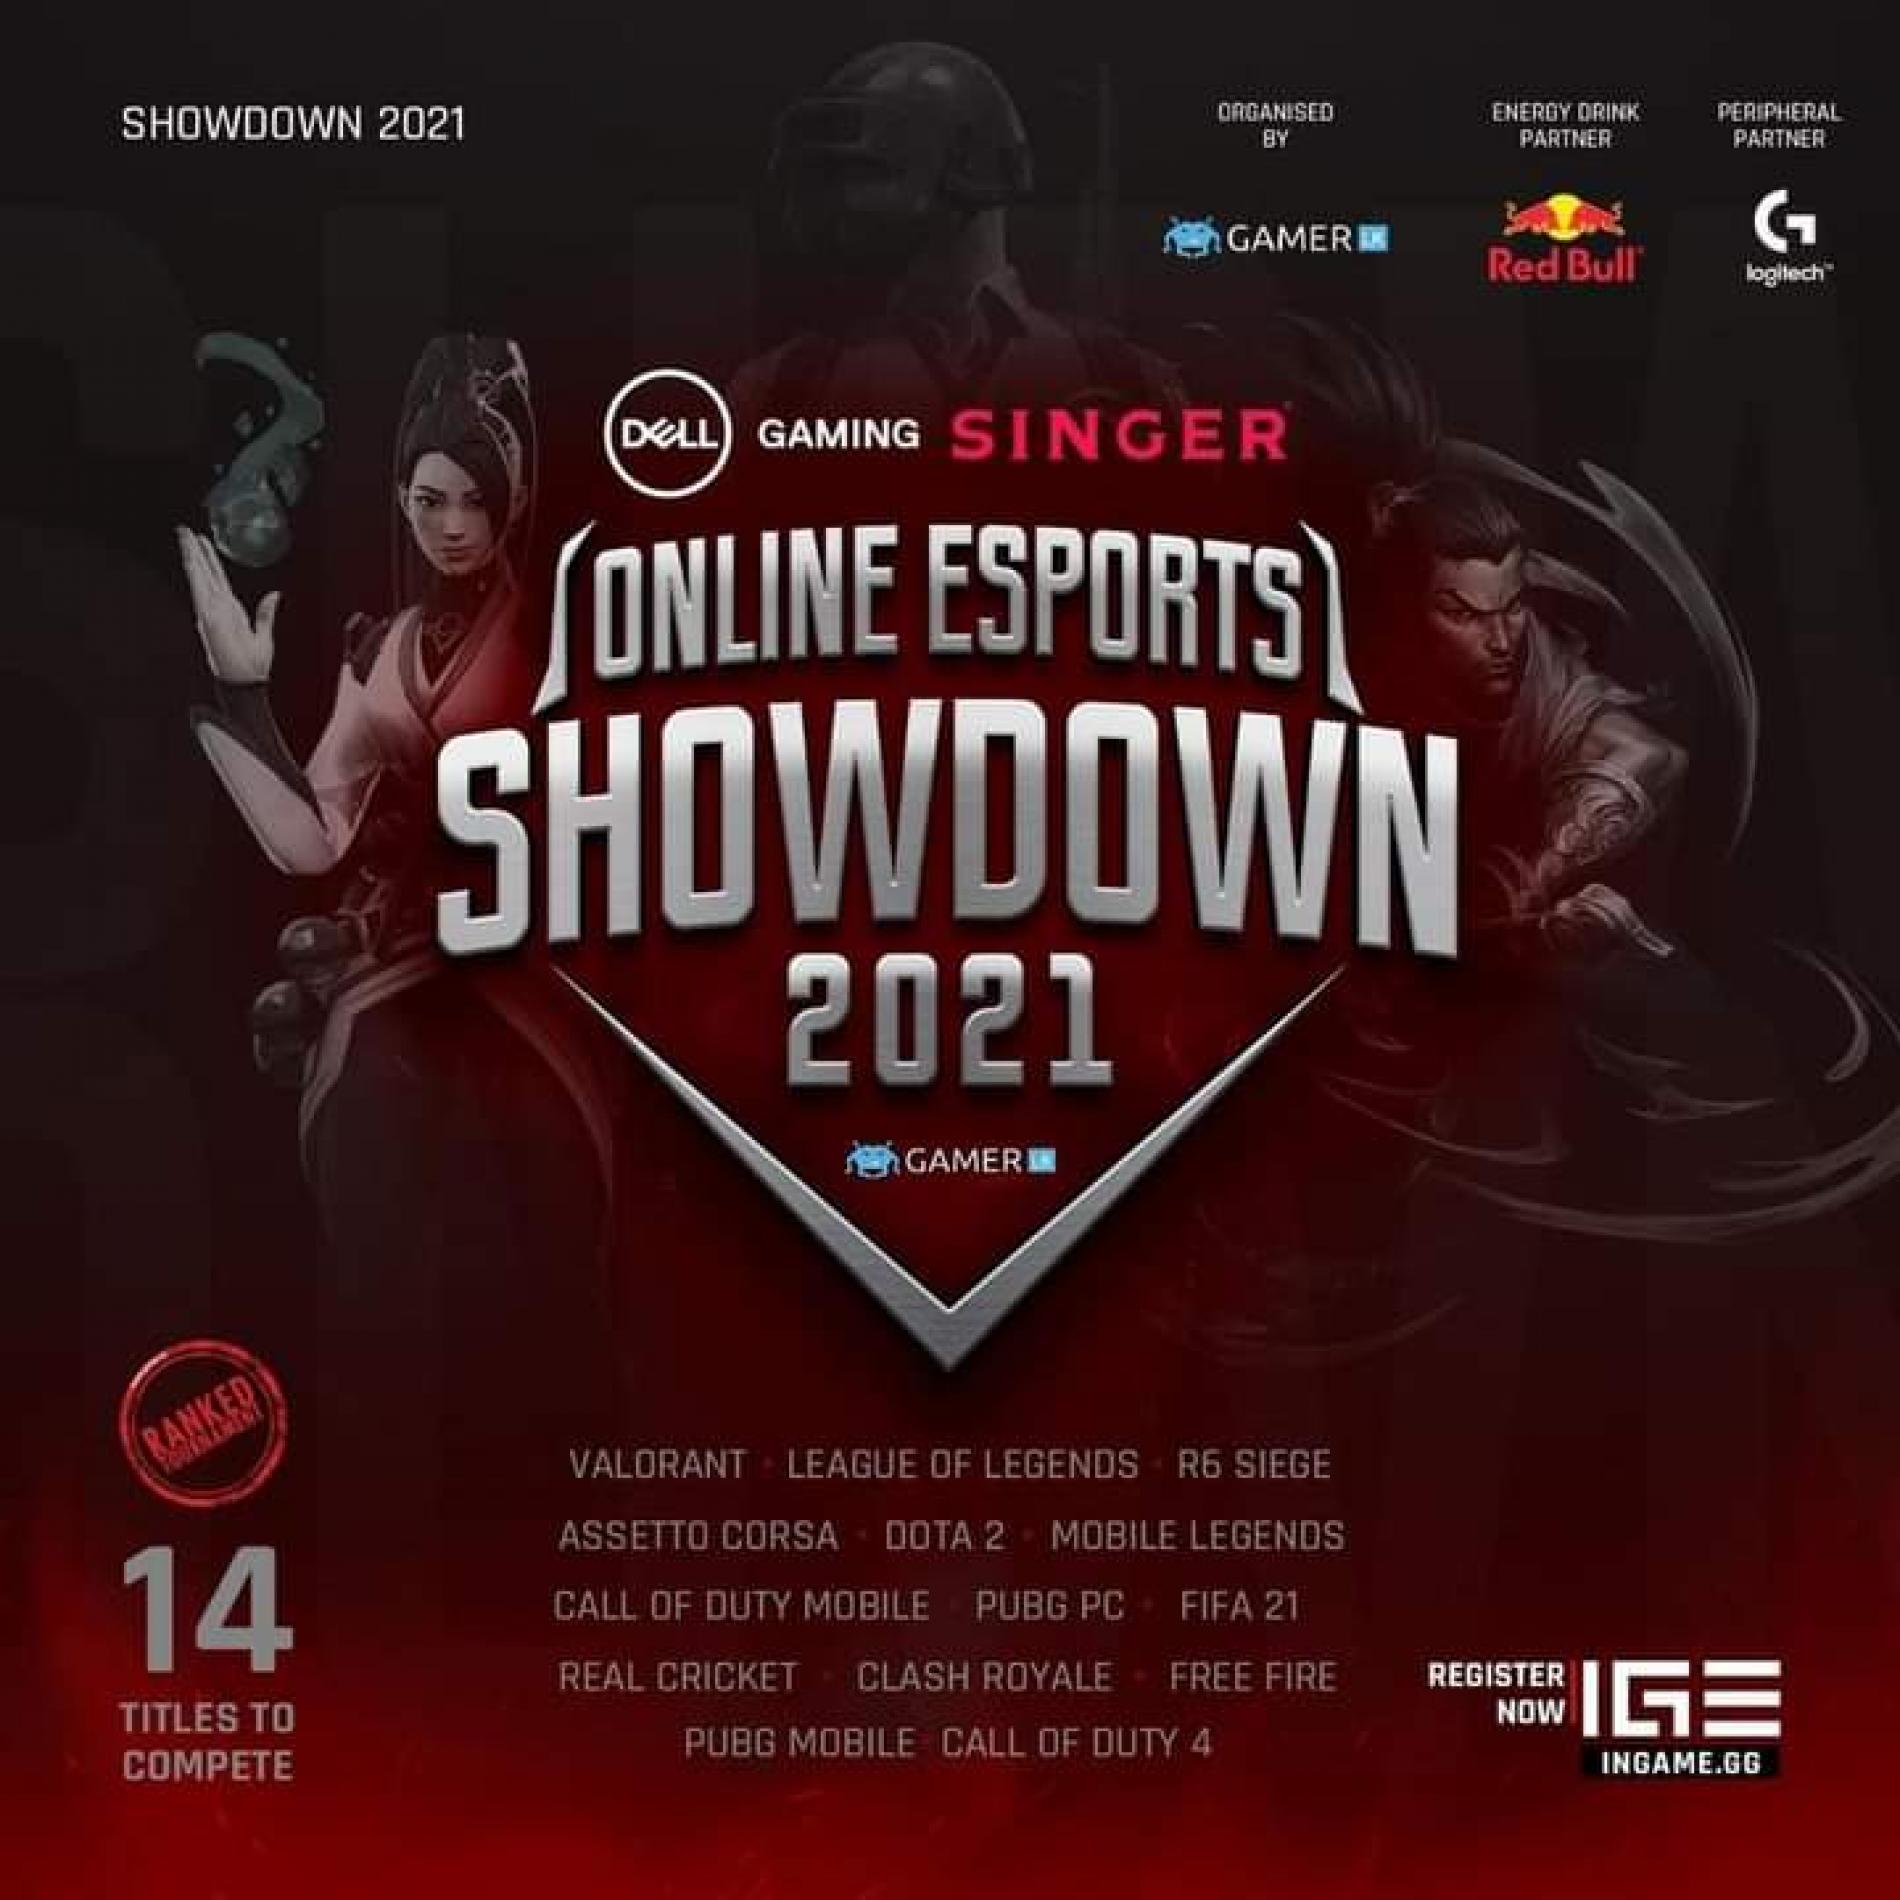 3000+ Participants for the “Online eSports Showdown 2021”